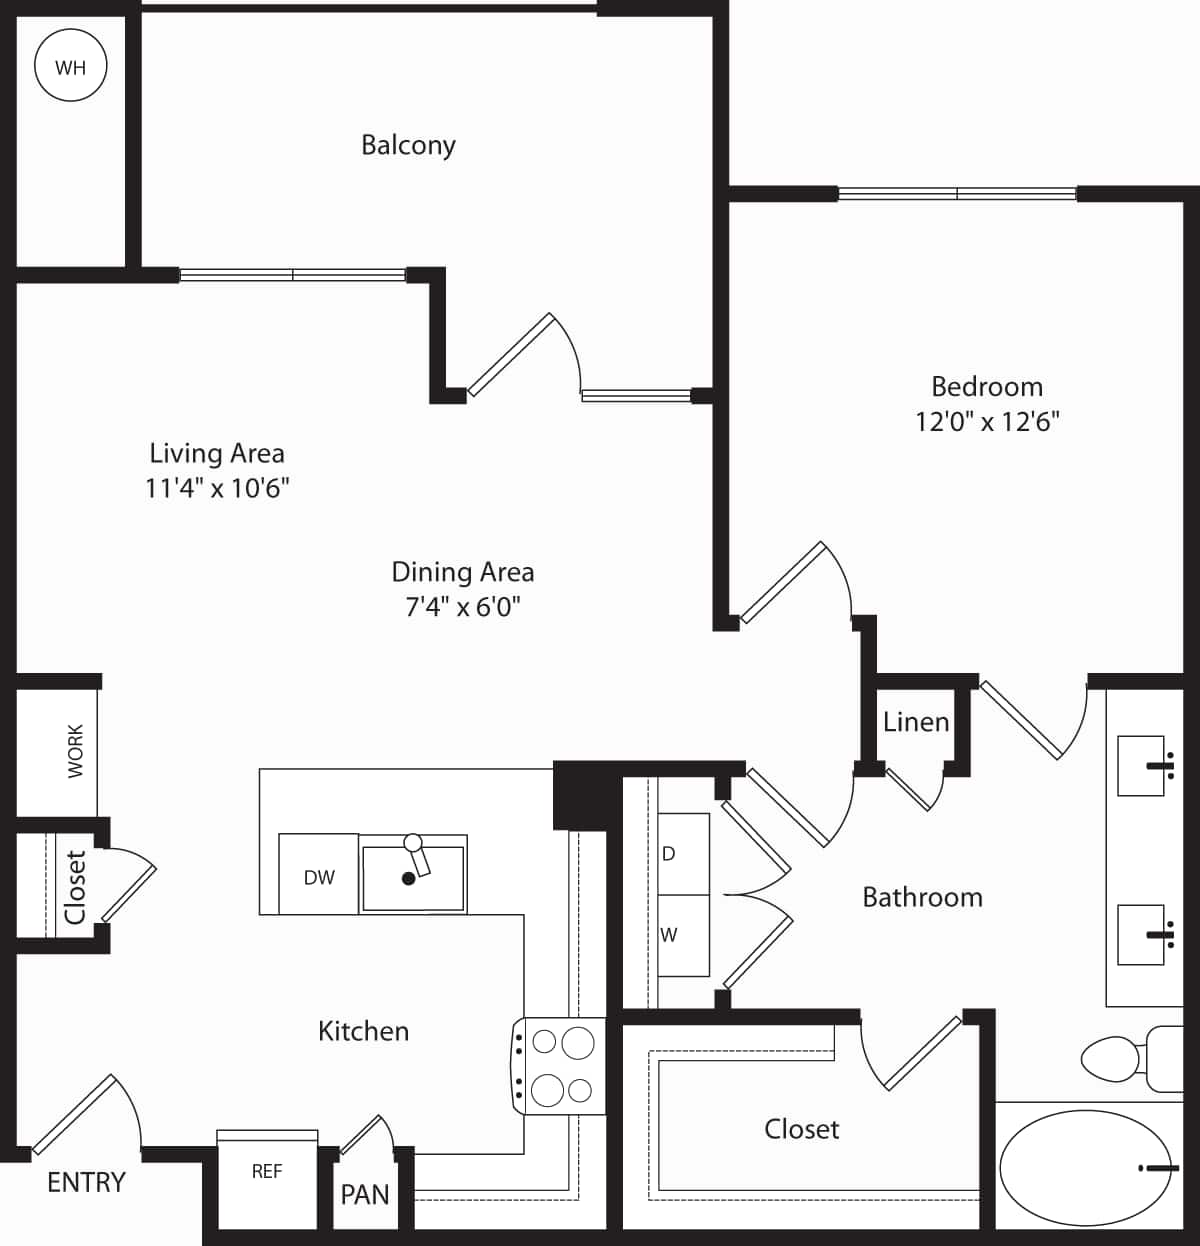 Floorplan diagram for A3, showing 1 bedroom